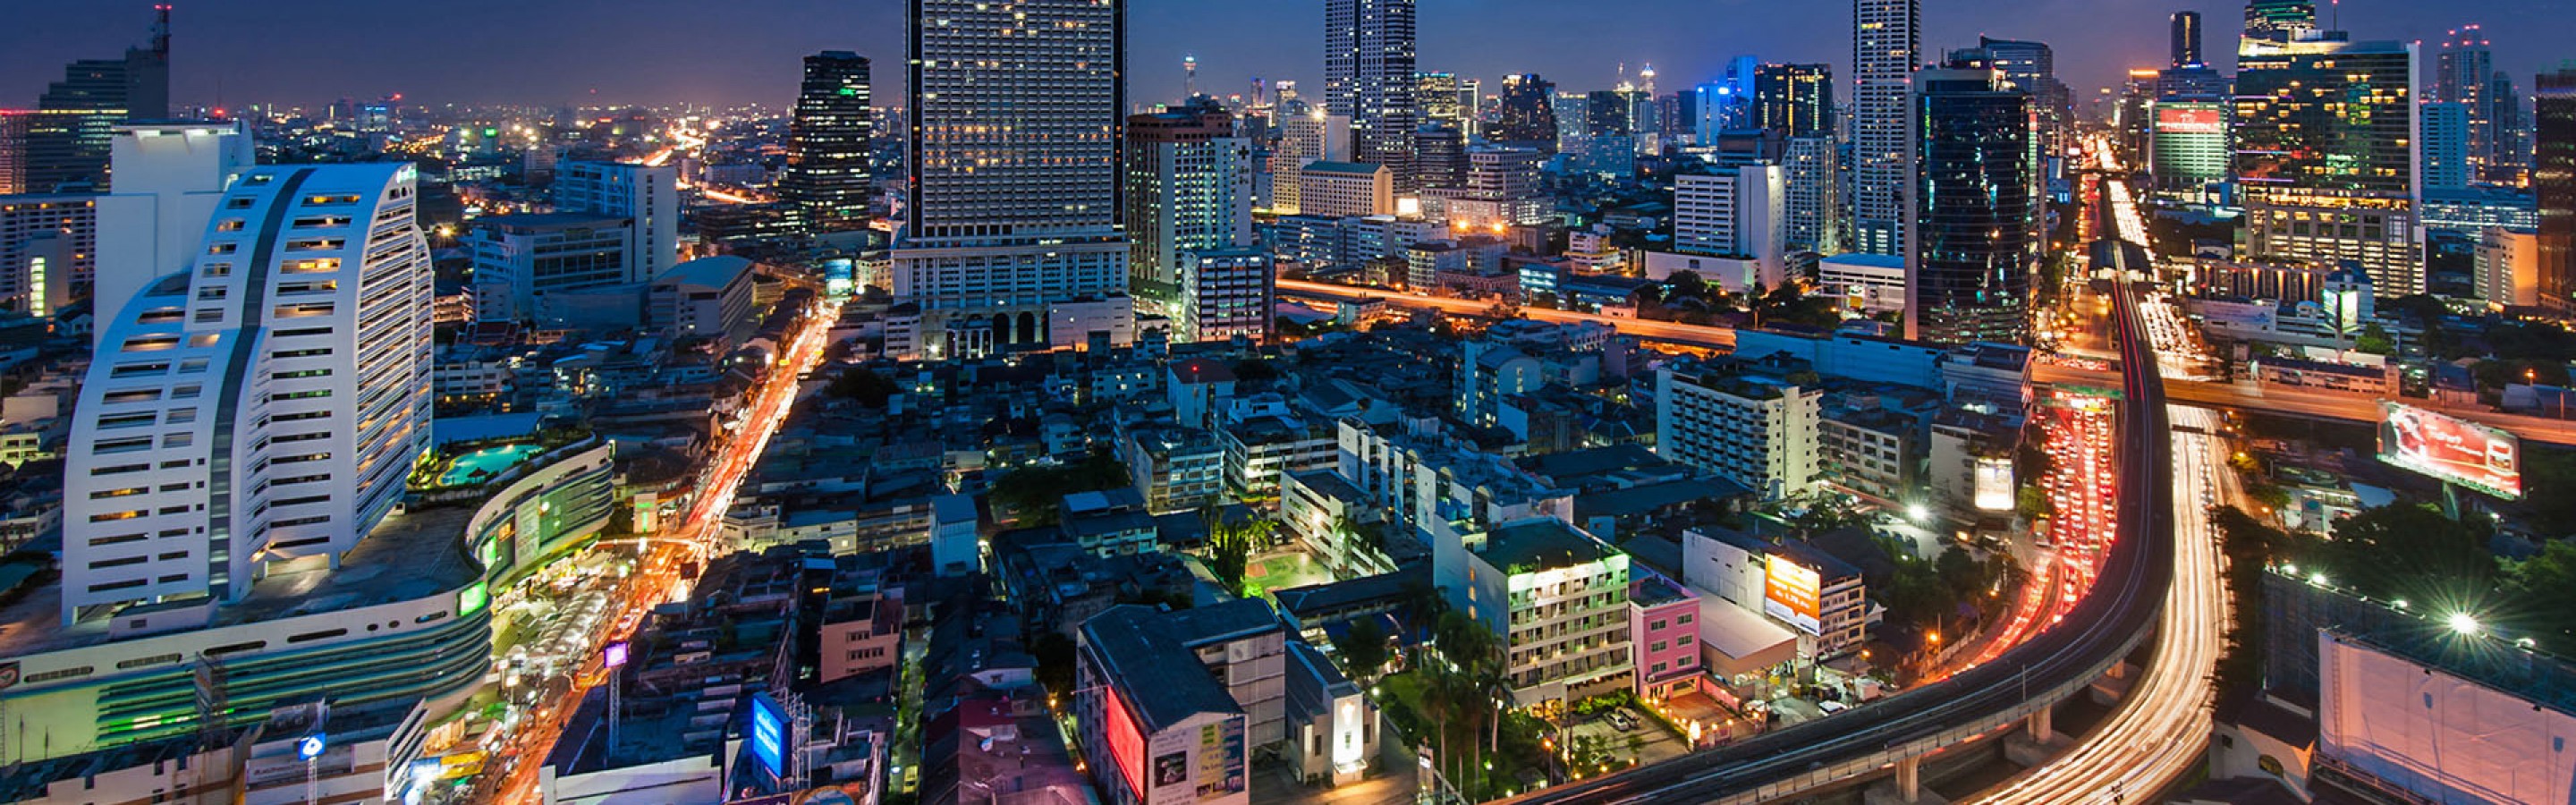 Bangkok thailand 2880x900